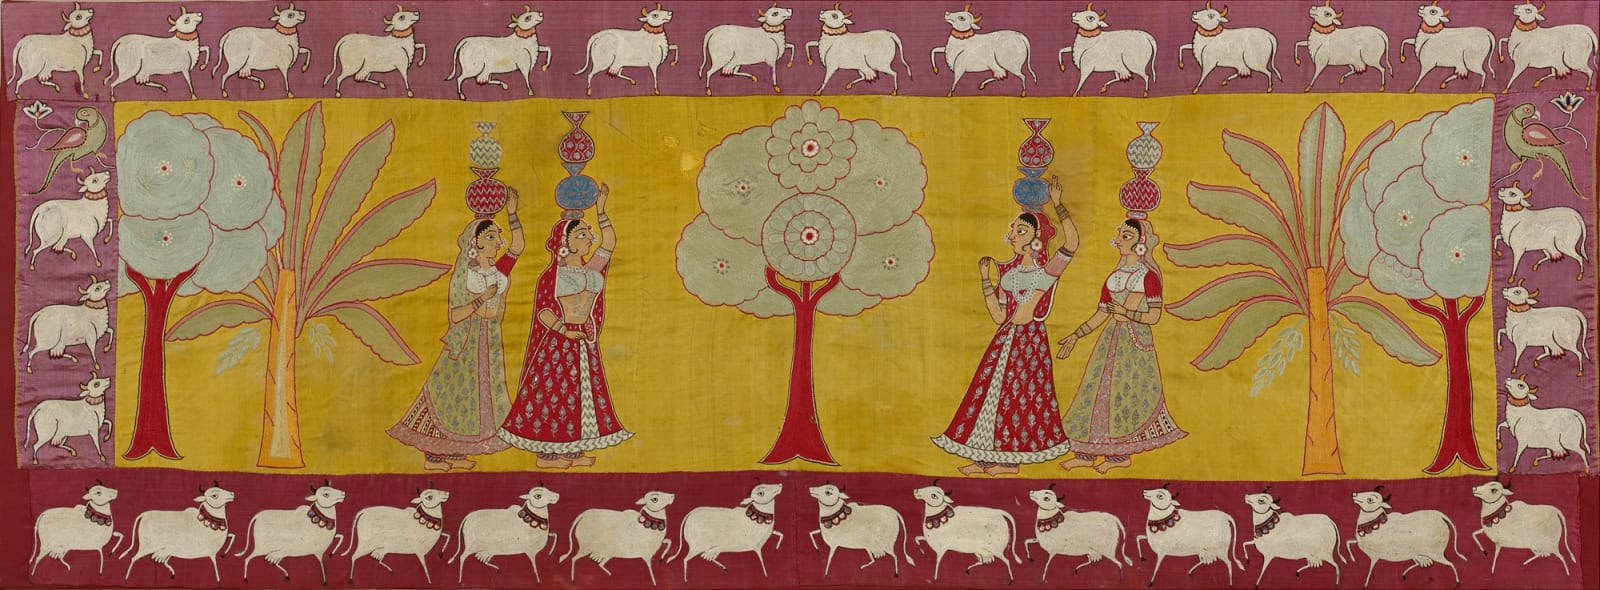 Mochi-work textile, Gujarat, late 19th/early 20th century